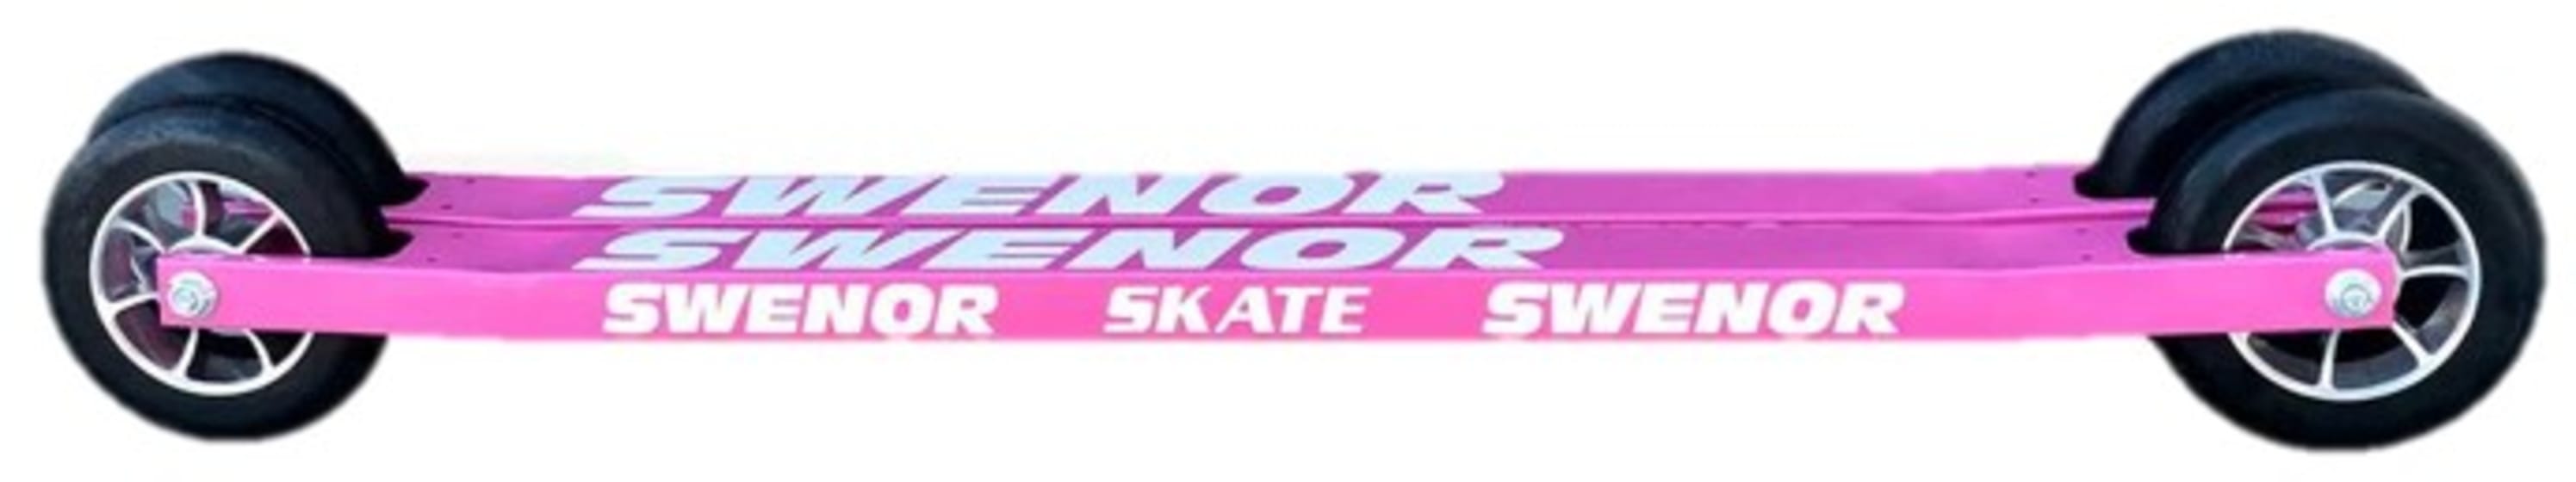 Swenor Skate Pink Edition